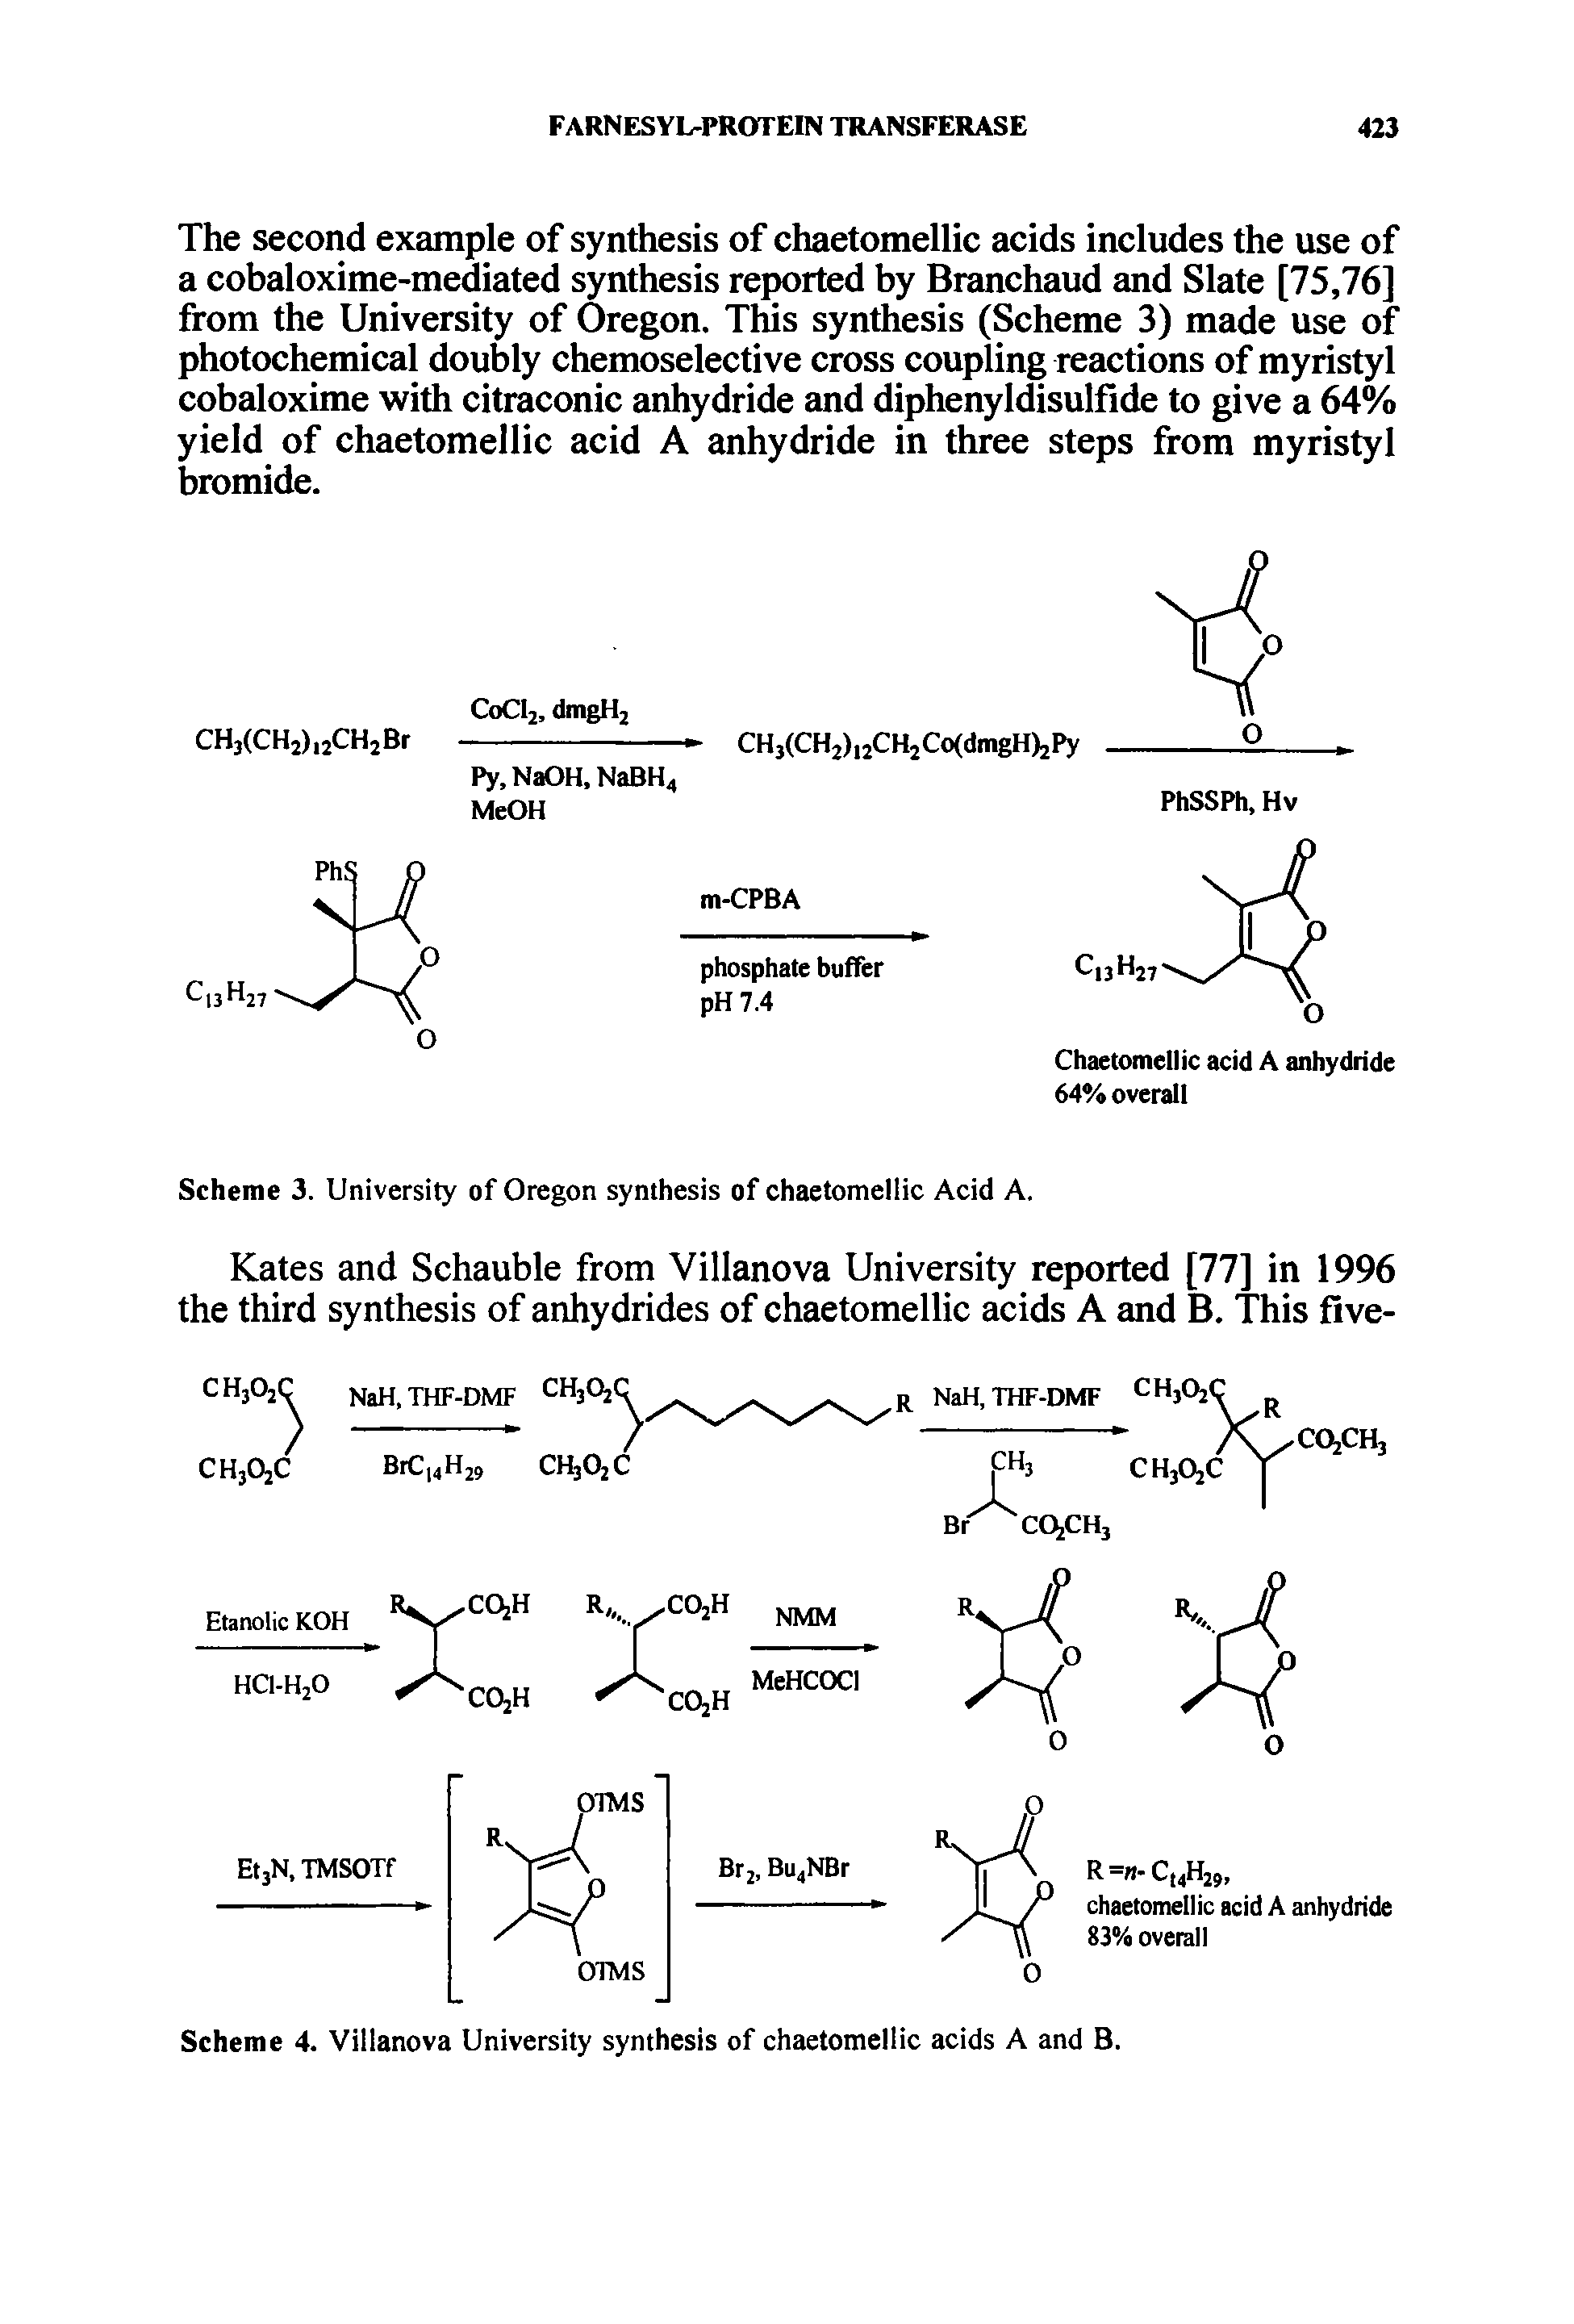 Scheme 4. Villanova University synthesis of chaetomellic acids A and B.